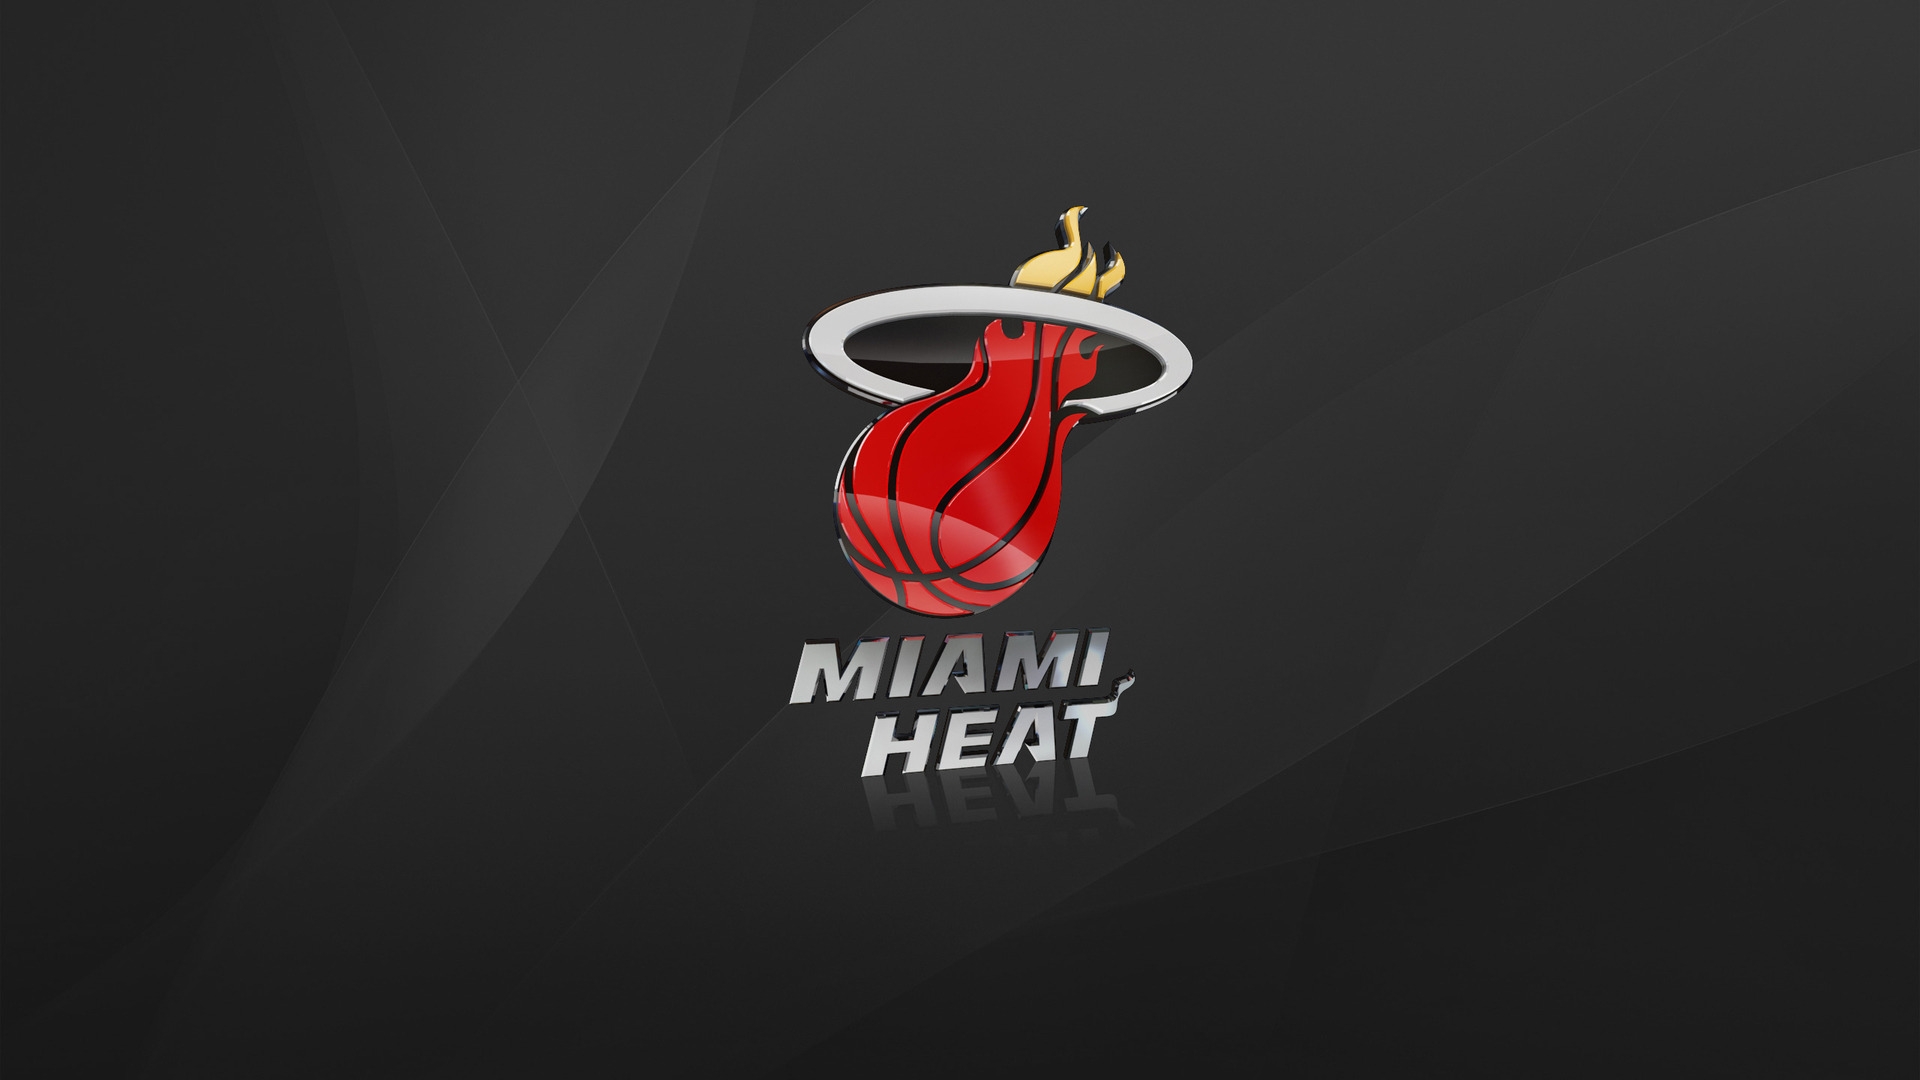 Miami Heat for 1920 x 1080 HDTV 1080p resolution